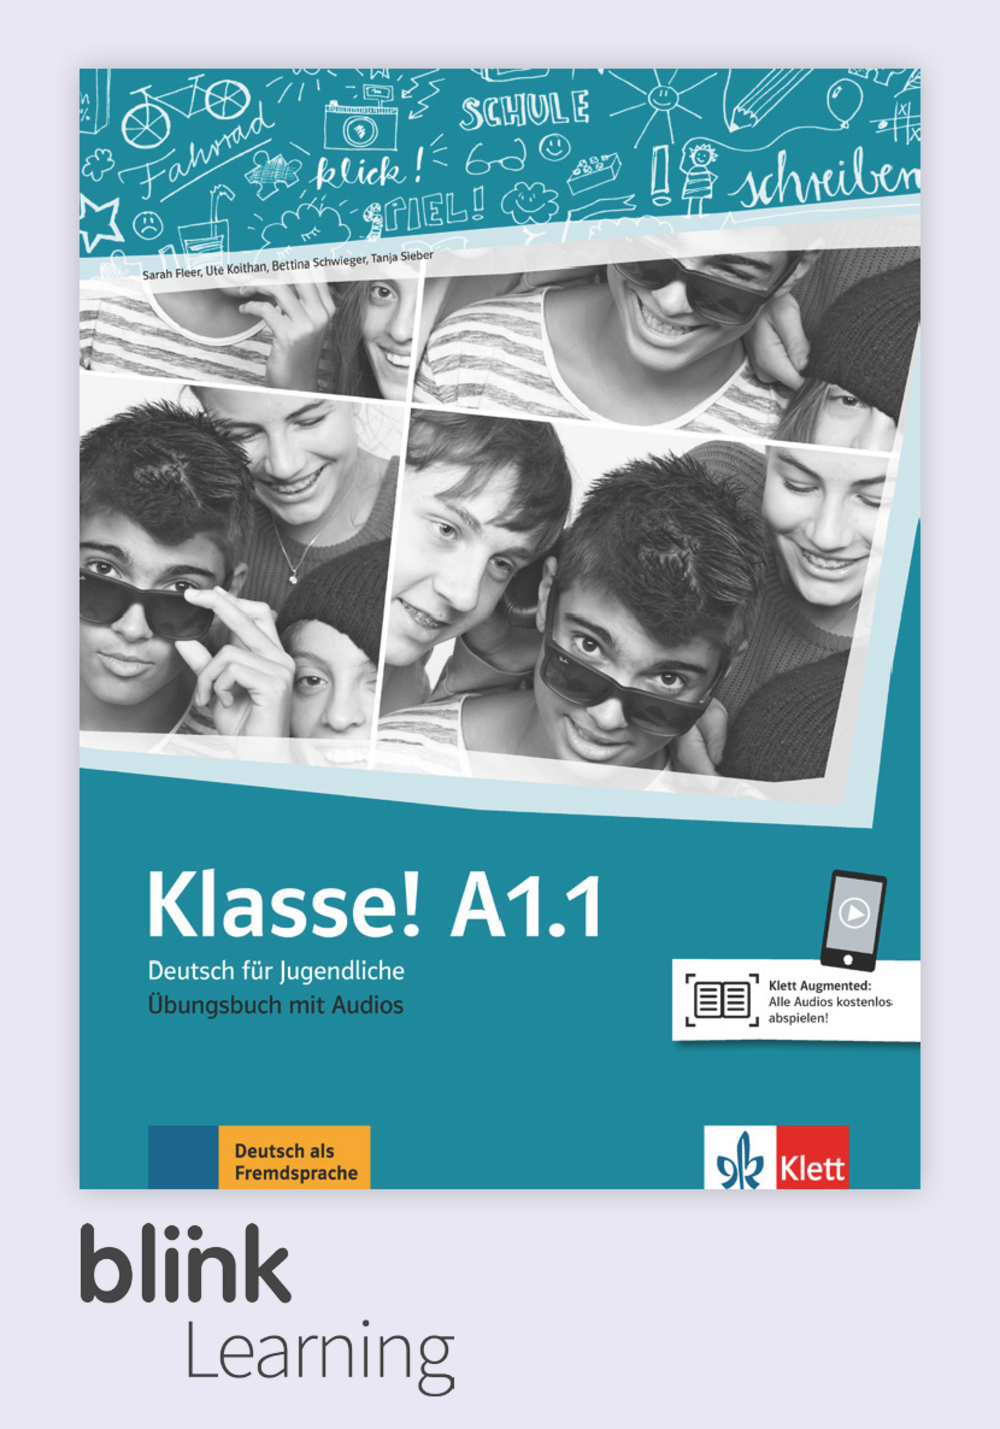 Klasse! A1.1 Digital Ubungsbuch fur Unterrichtende / Цифровая рабочая тетрадь для учителя